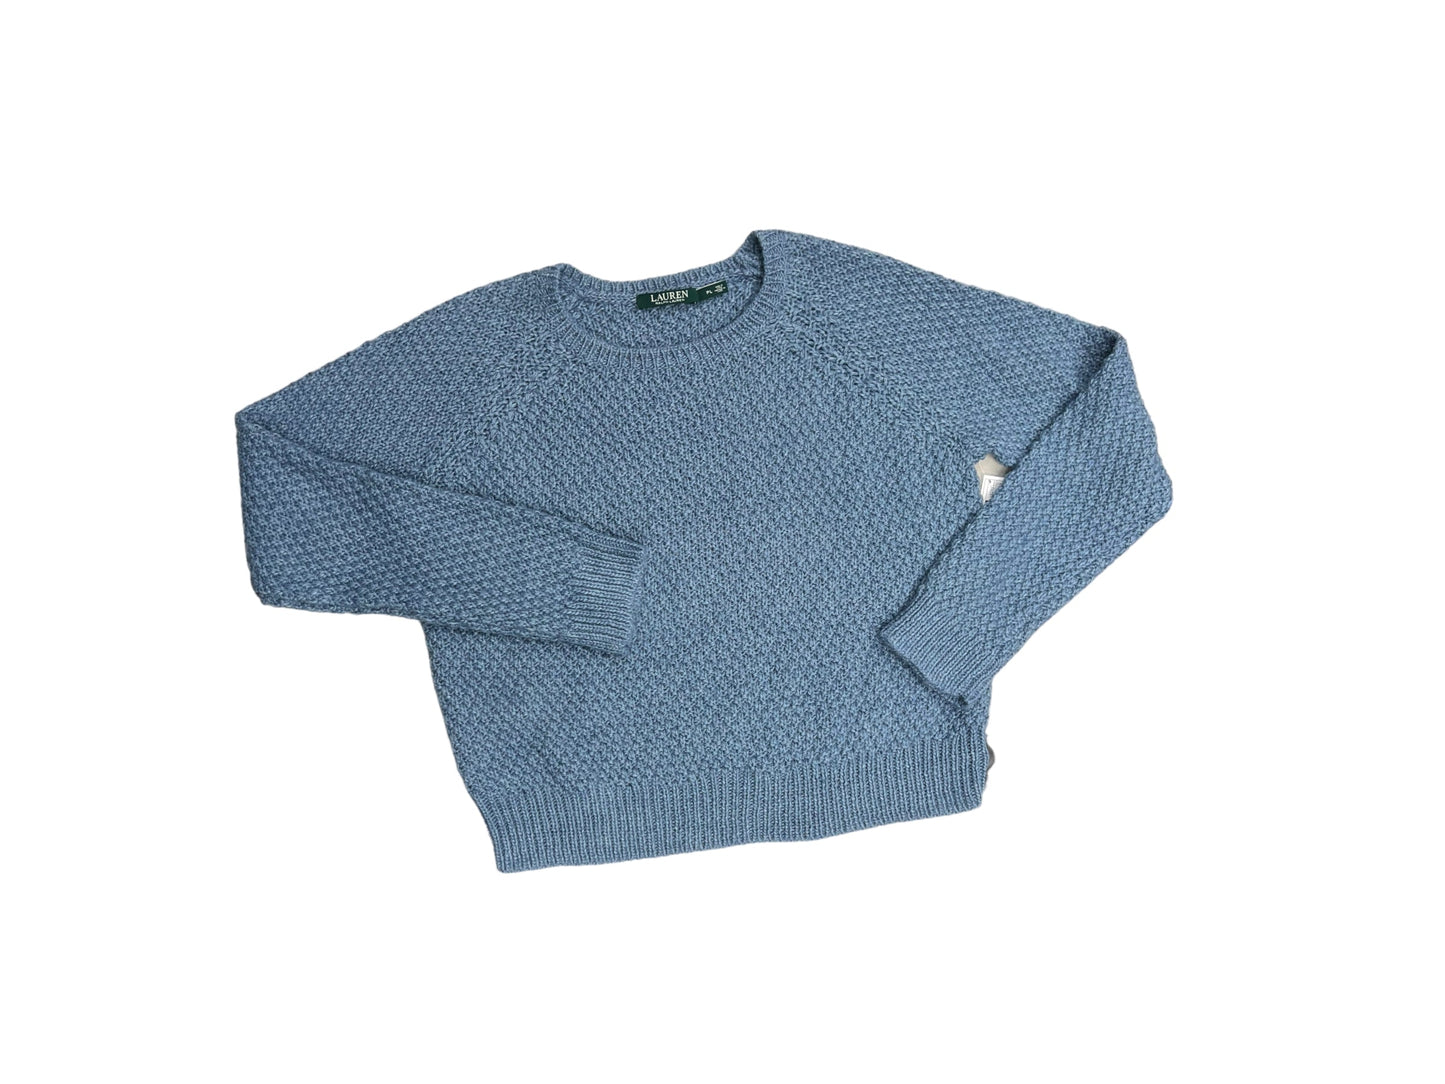 Sweater By Lauren By Ralph Lauren  Size: Petite Large